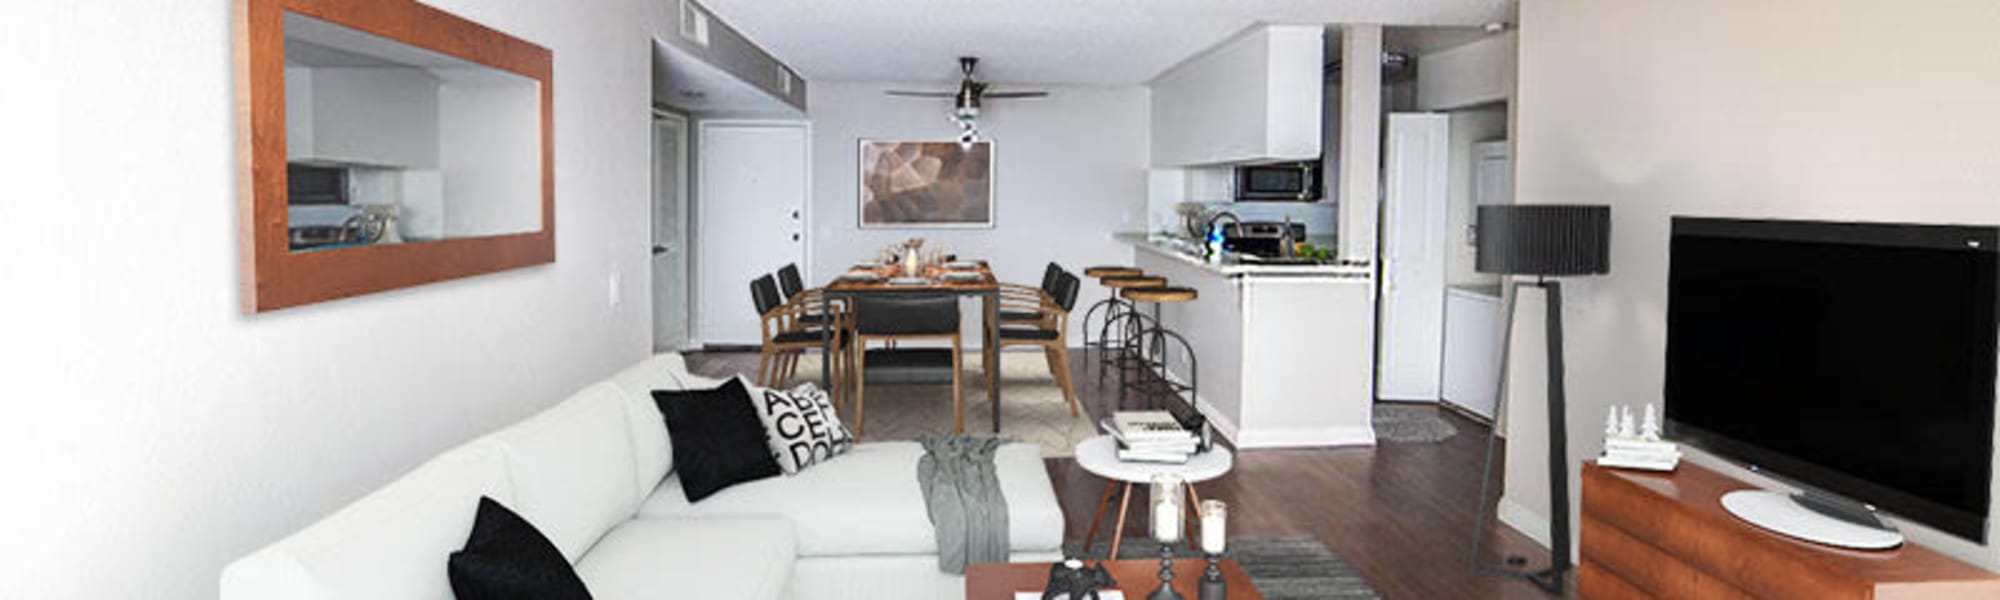 Floor Plans | Blix32 Apartments in Toluca Lake, California